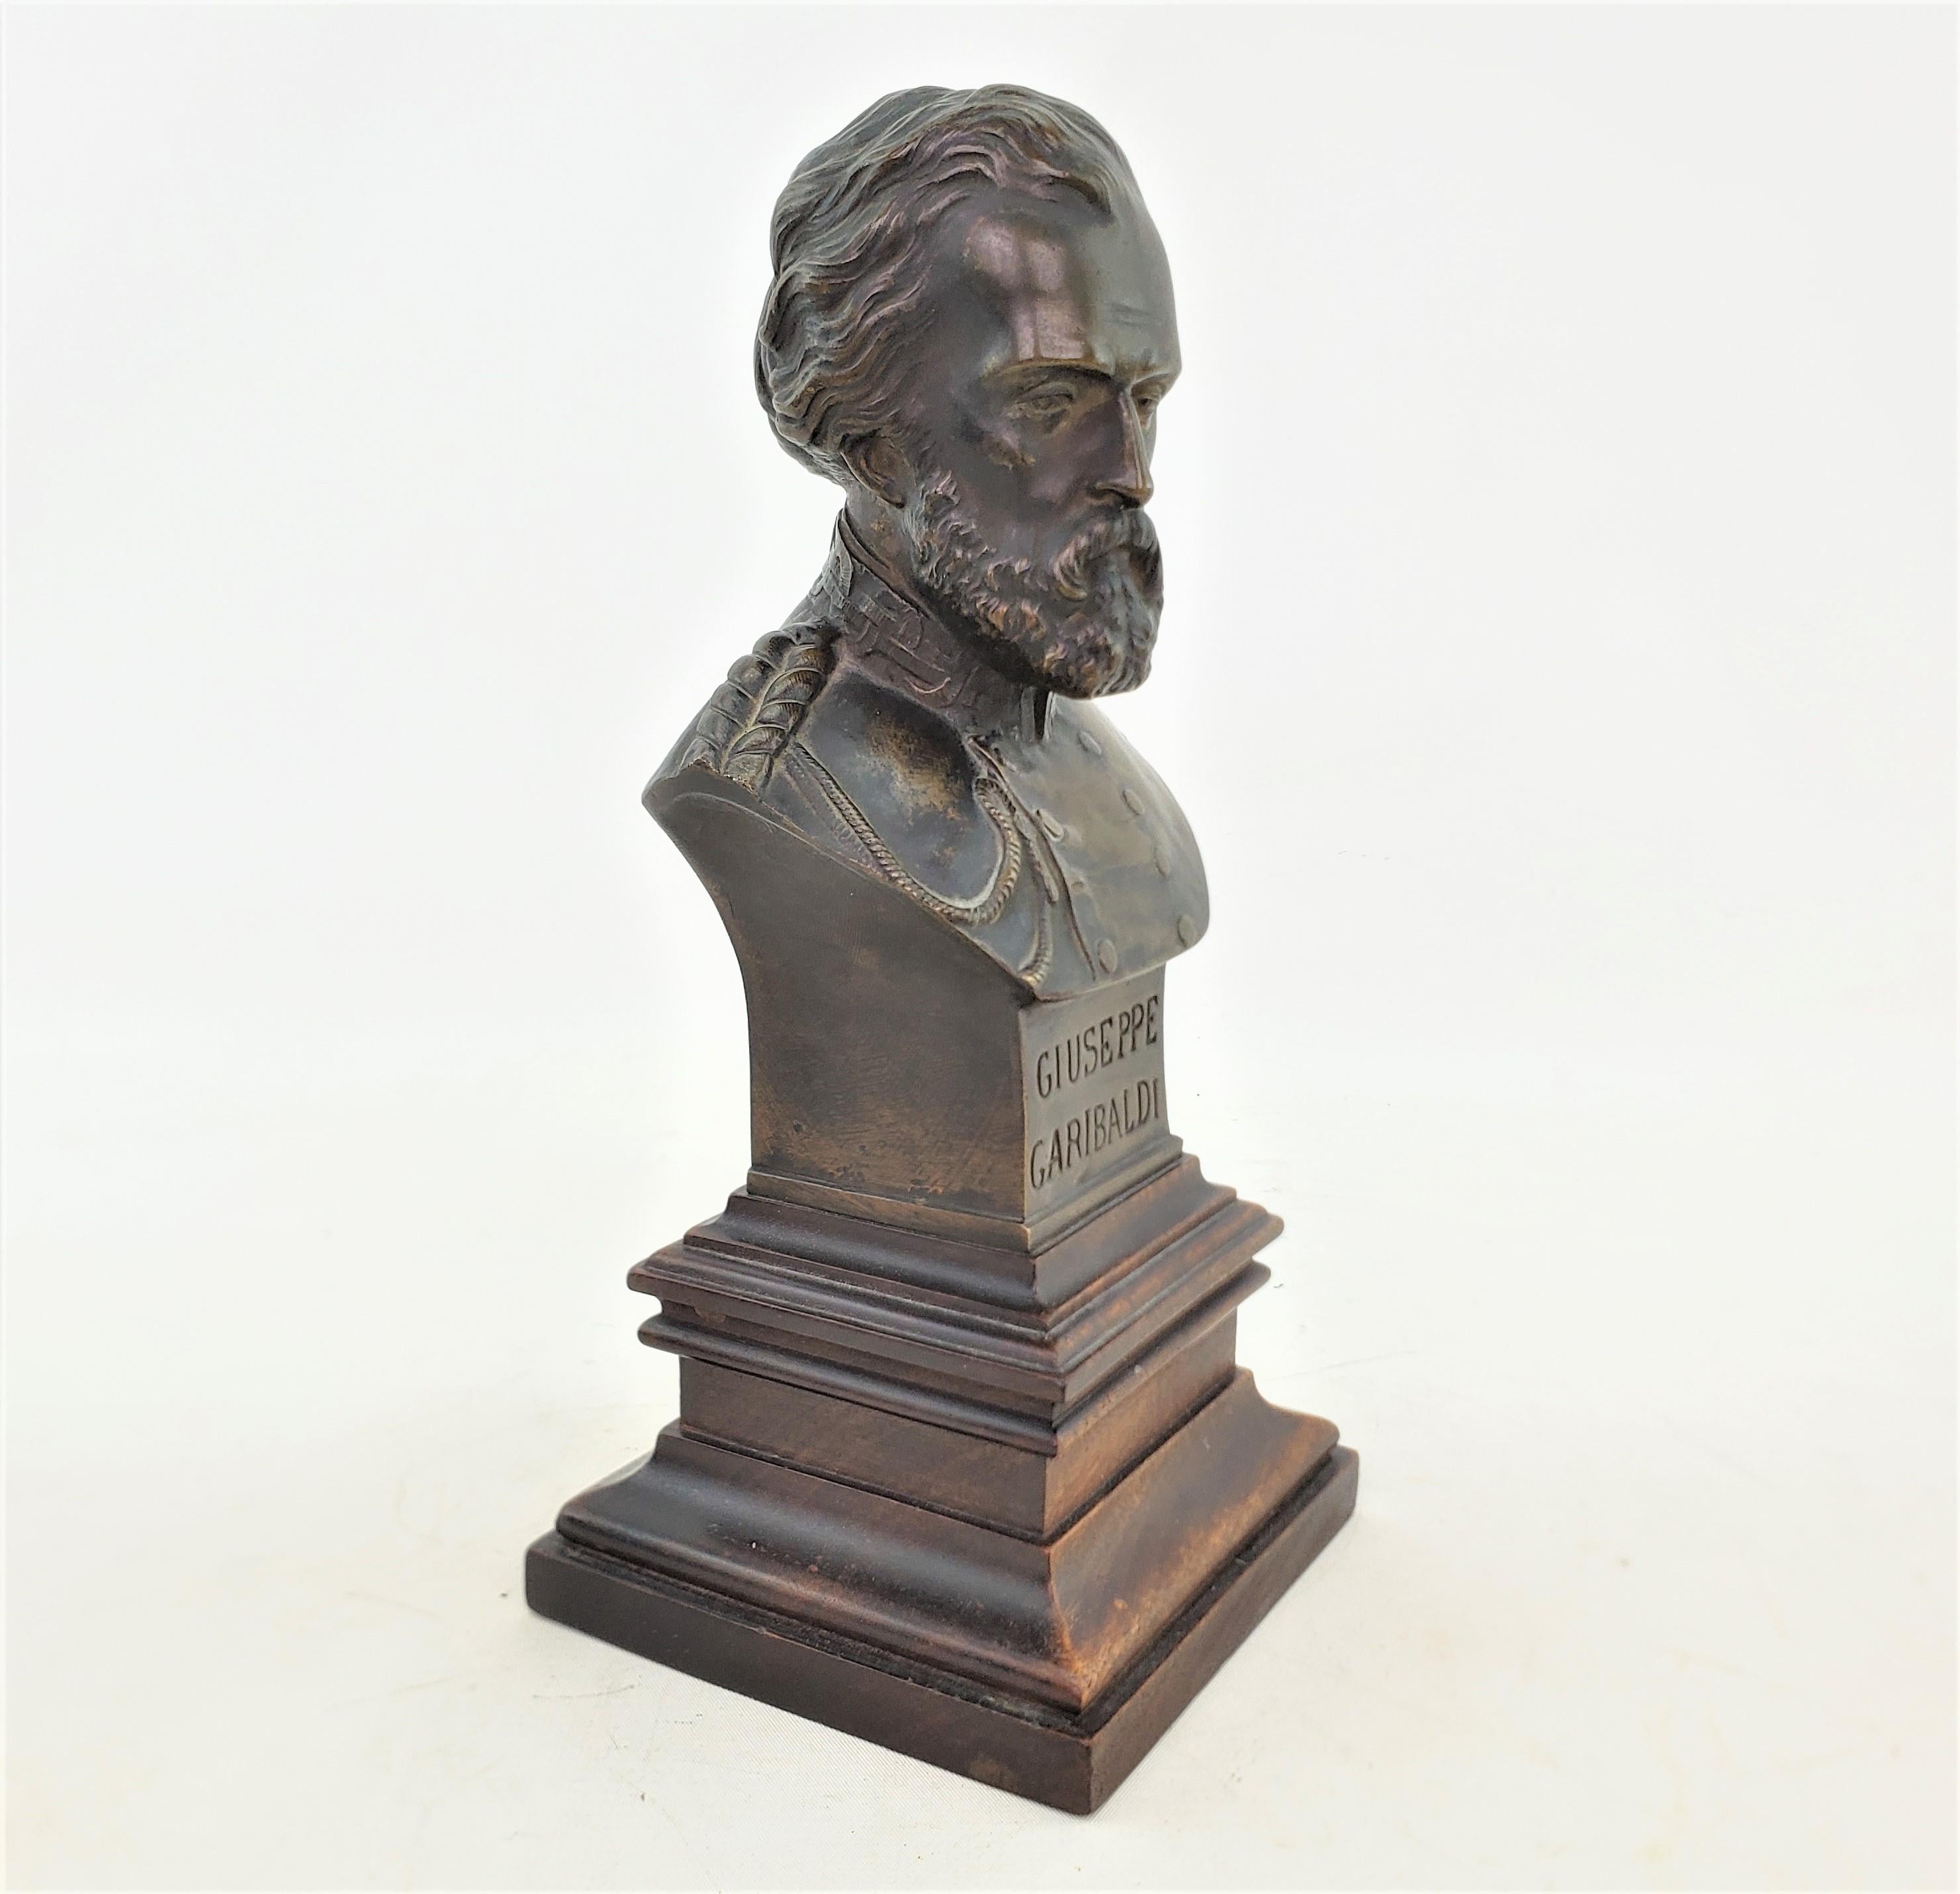 Late Victorian Giuseppe Garibaldi Antique Italian Bronze Bust or Sculpture on a Wooden Base